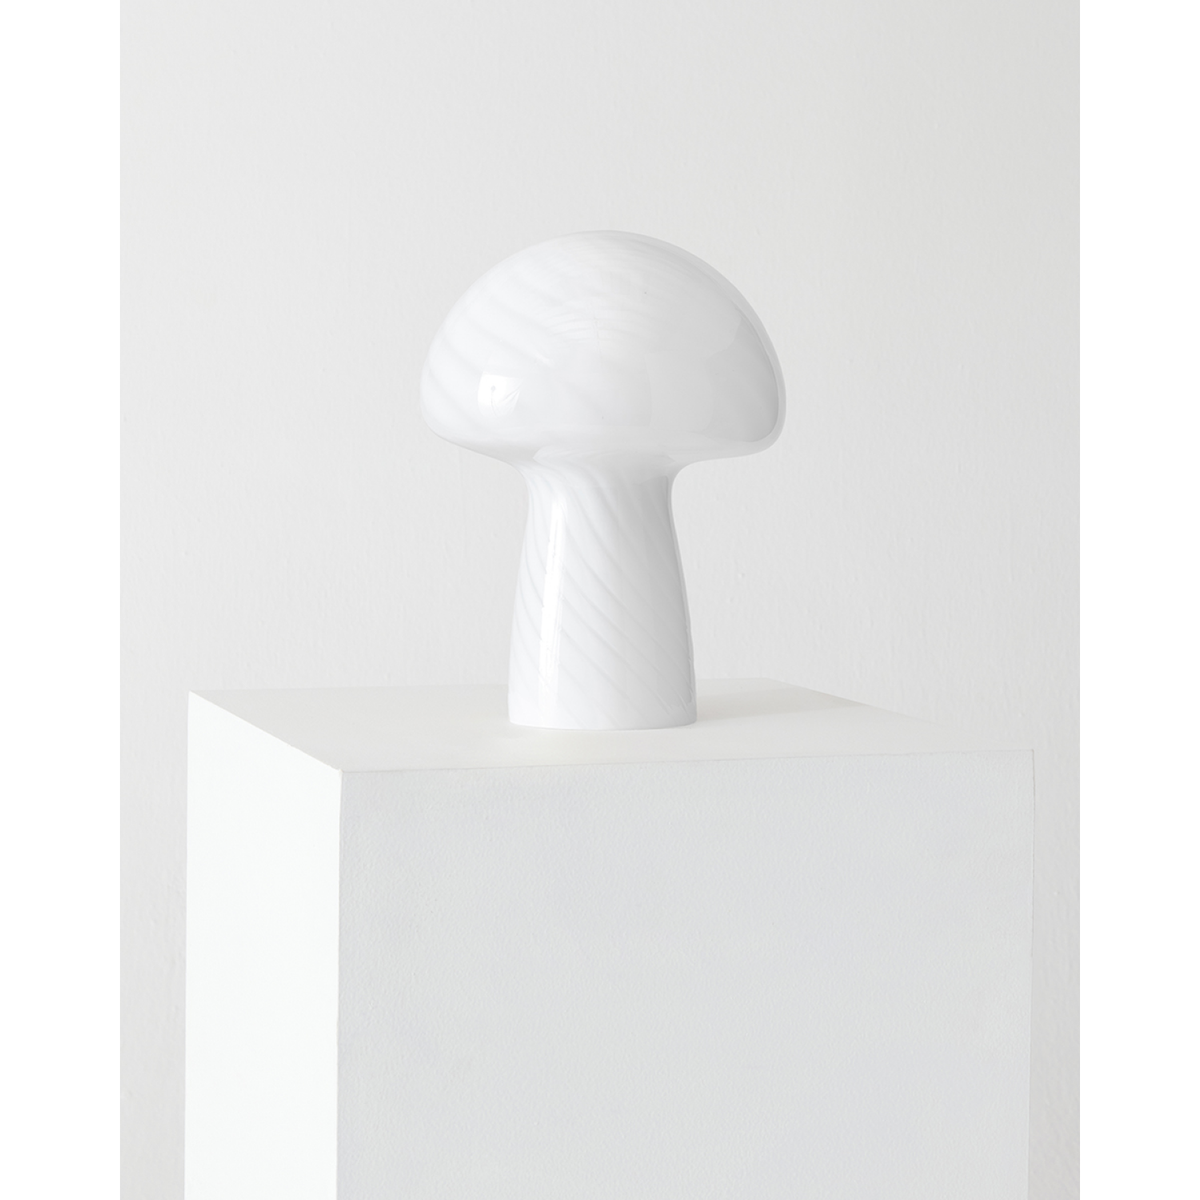 Mushroom Table Lamp by Brightech